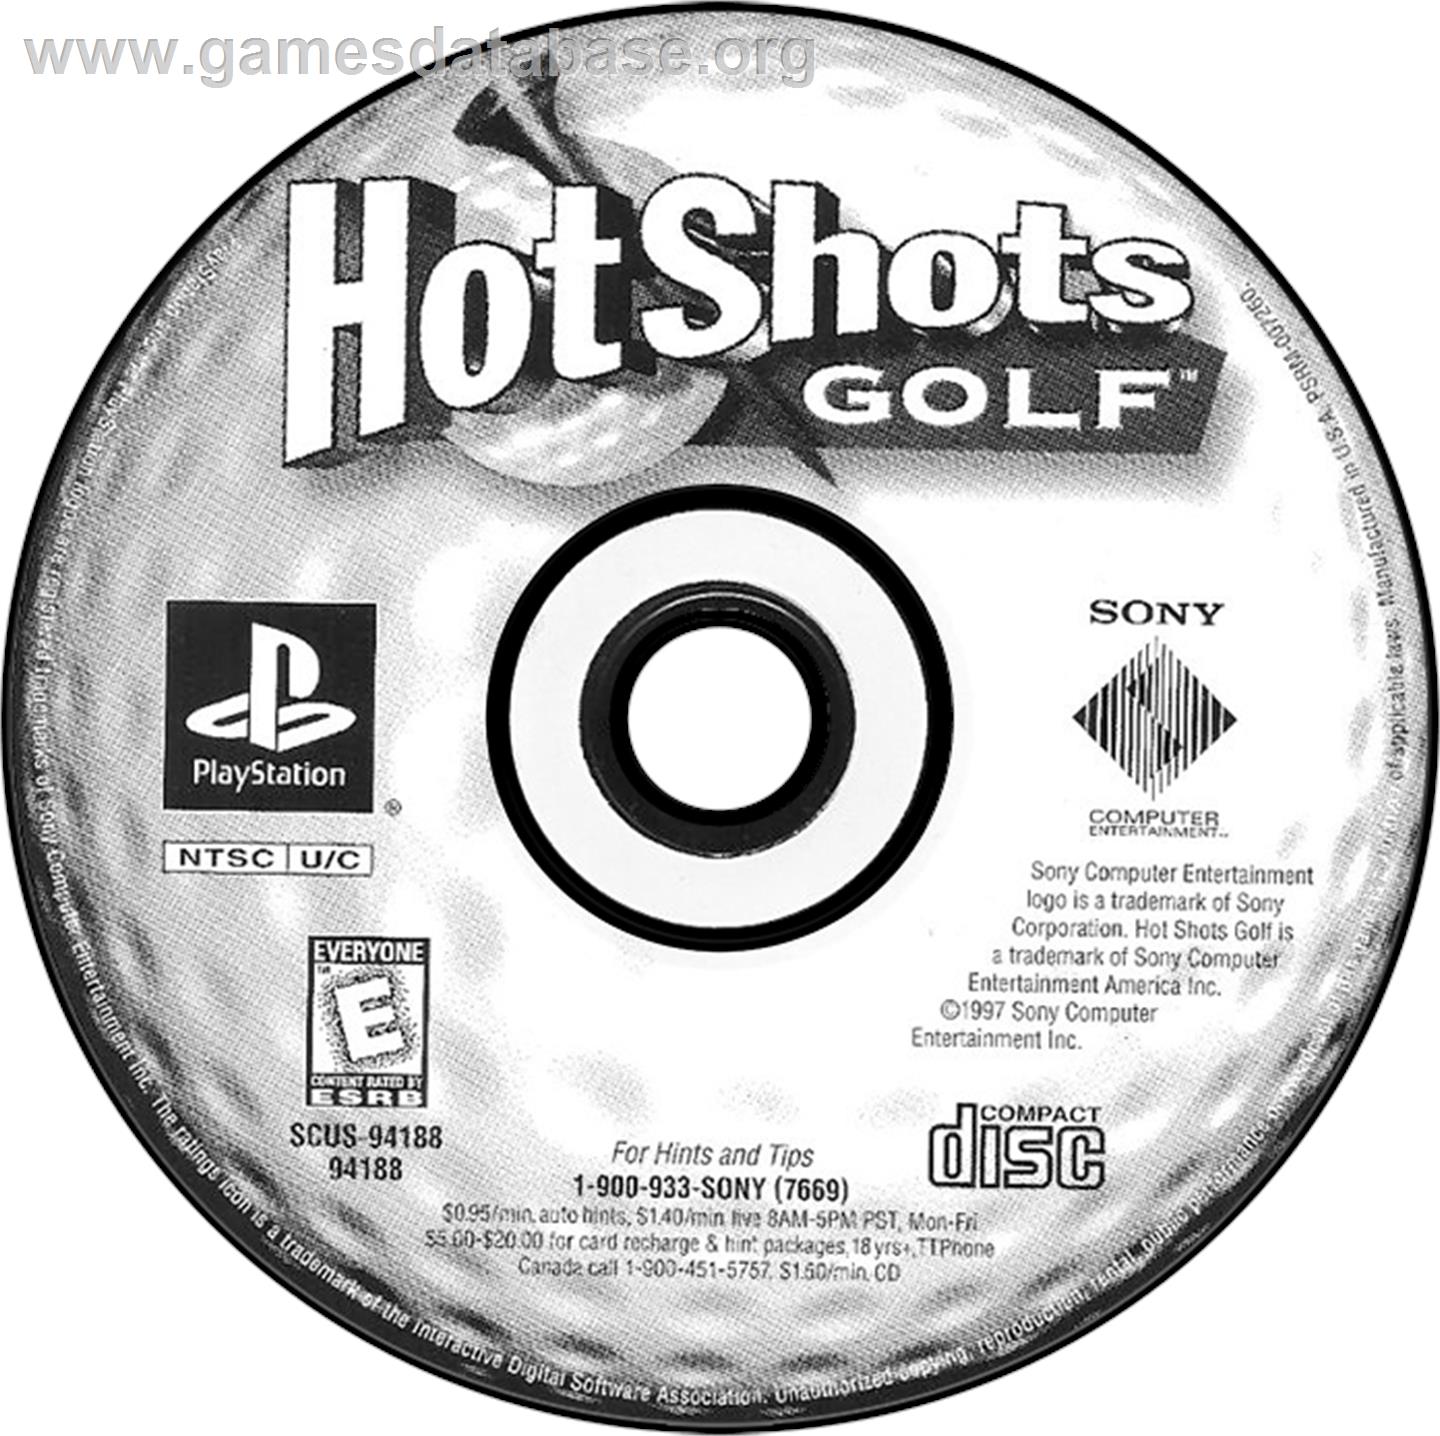 Hot Shots Golf - Sony Playstation - Artwork - Disc